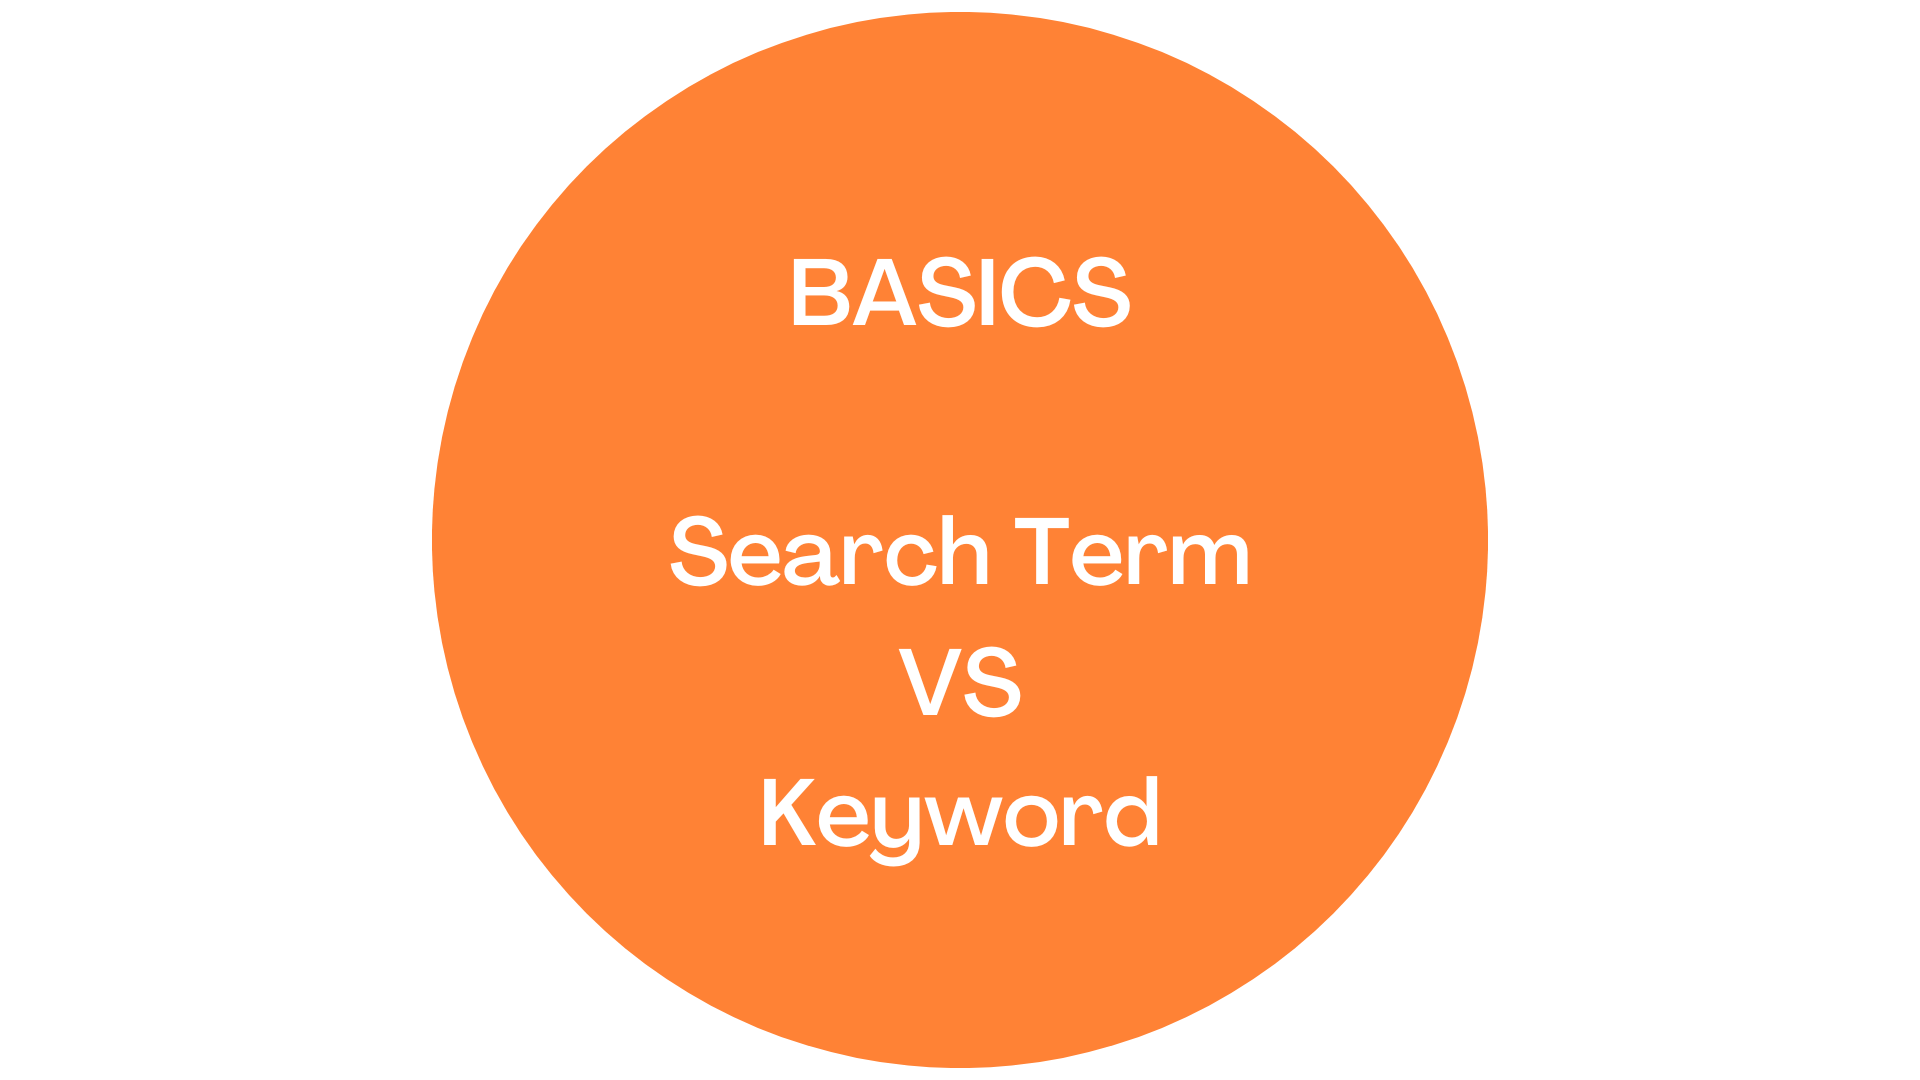 Search Term vs Keyword